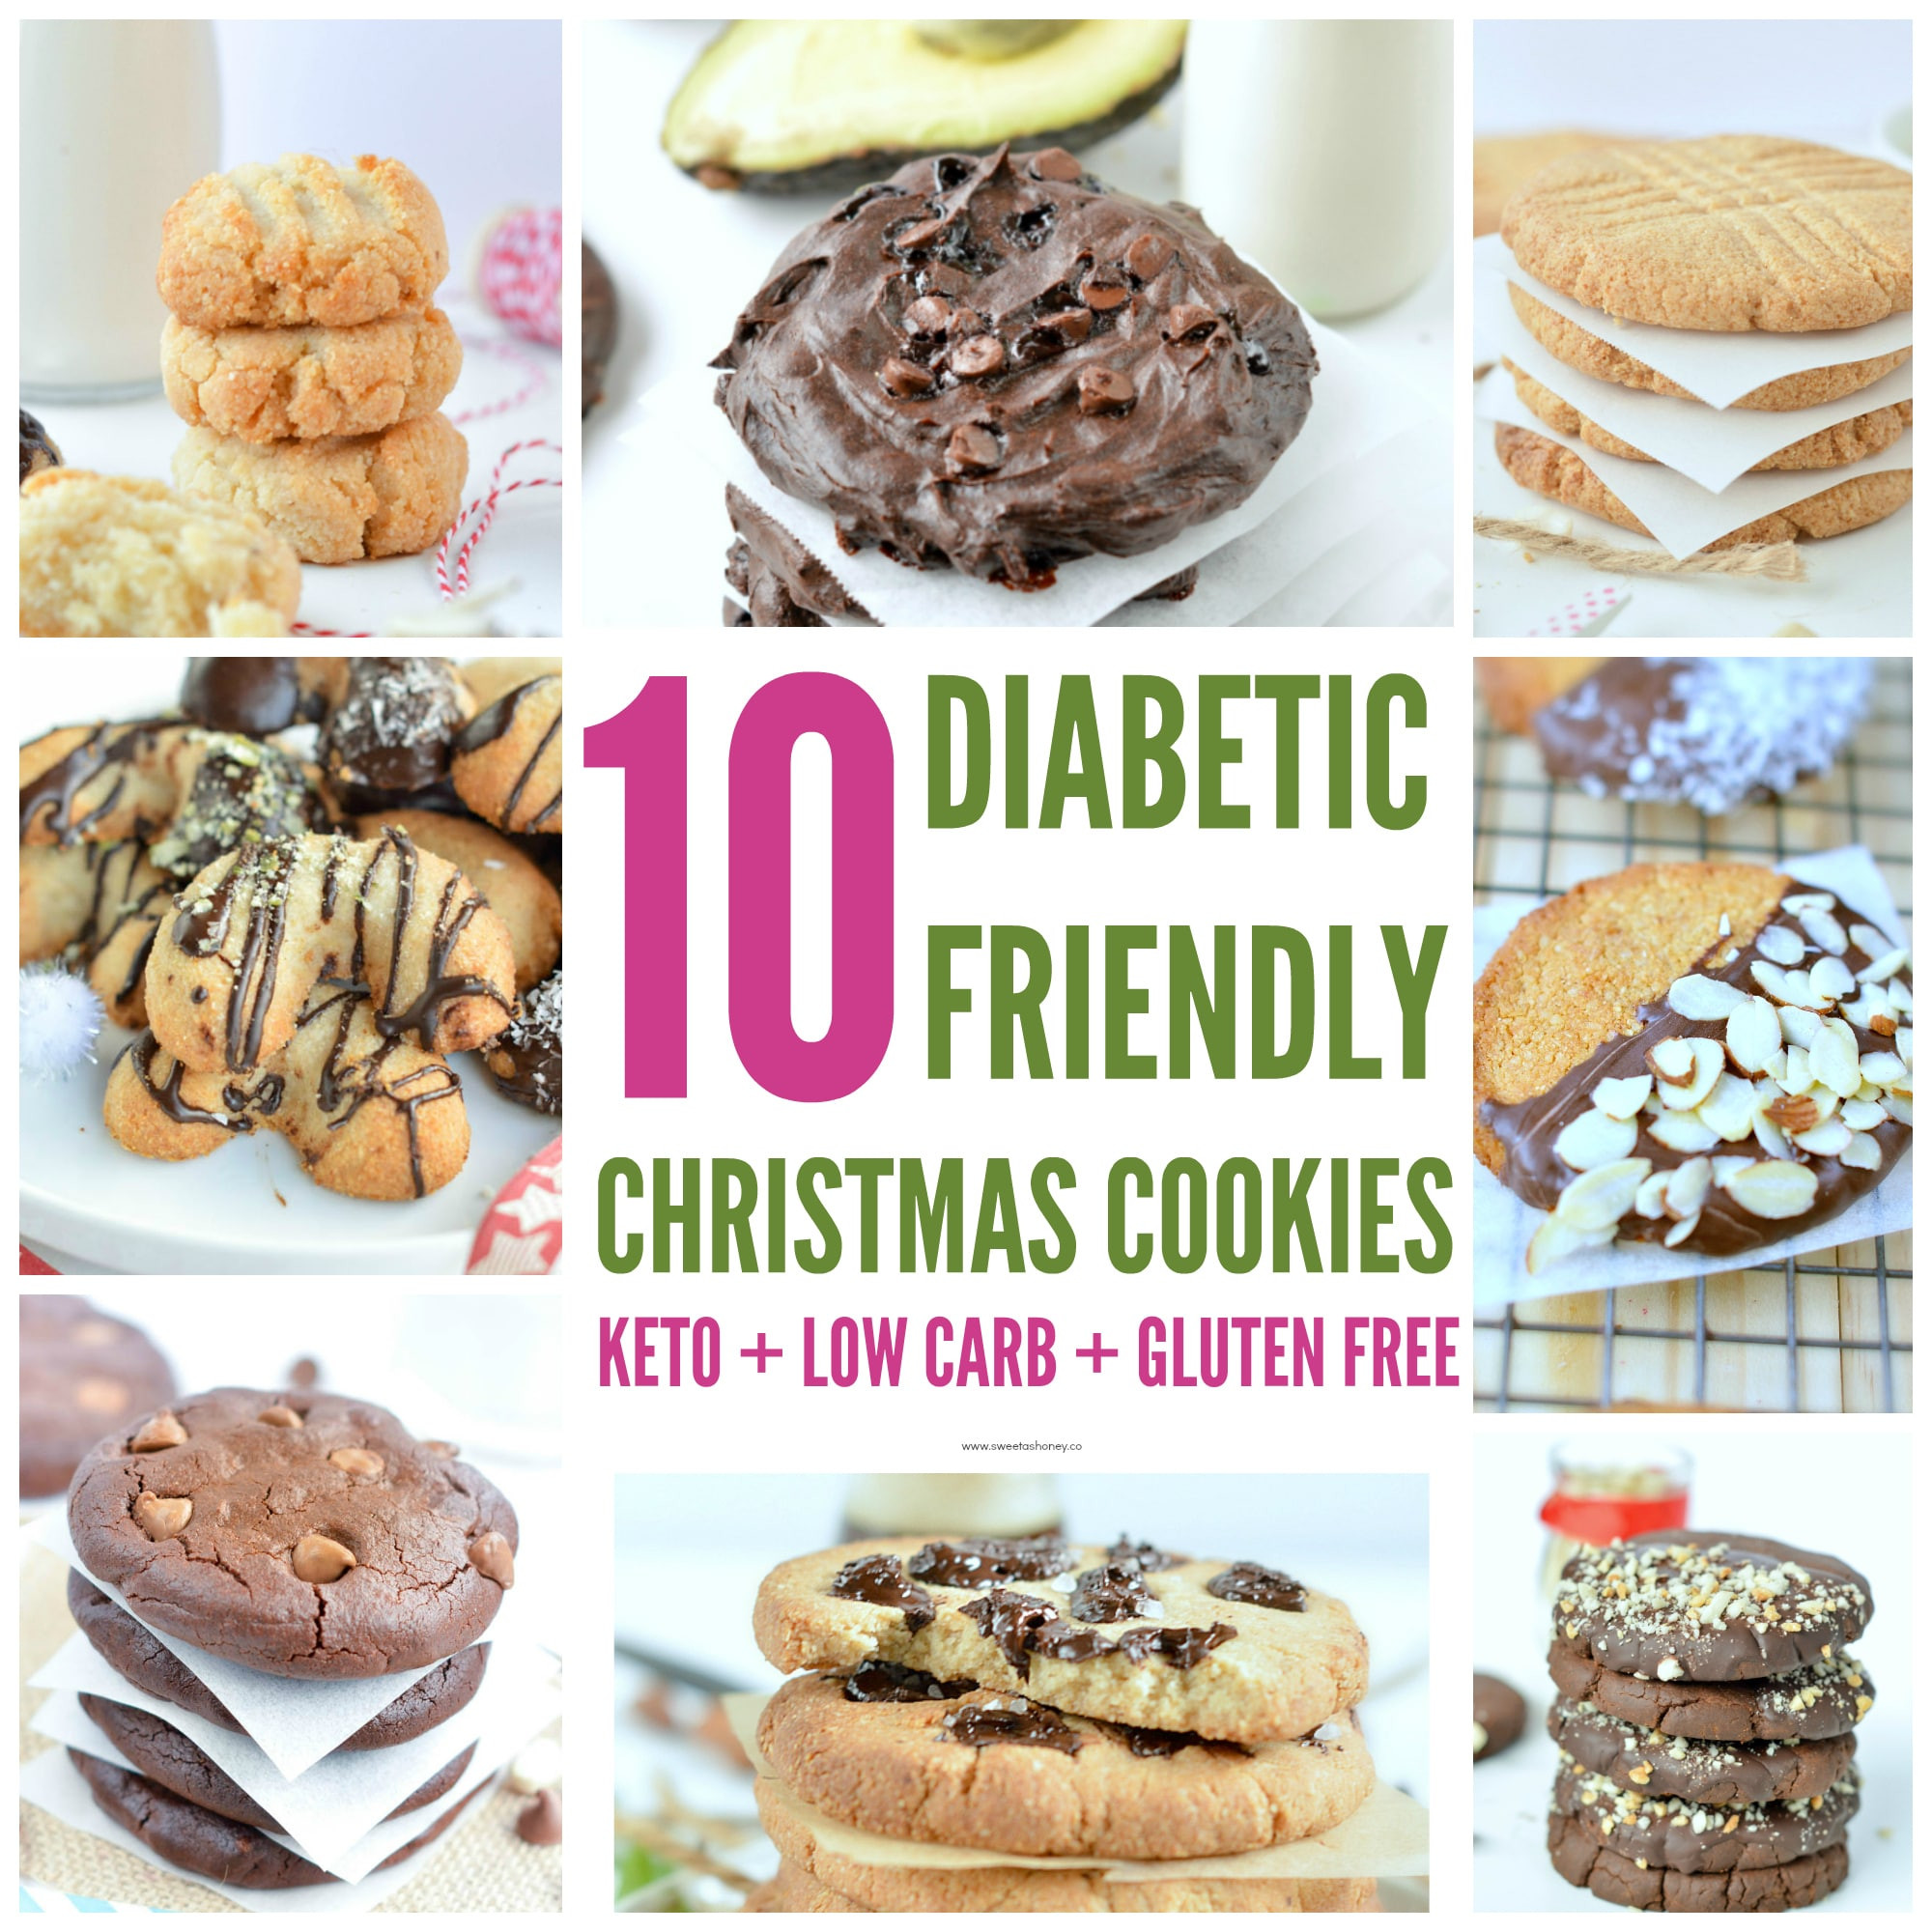 Sugar Free Christmas Cookies Recipes
 Sugar Free Christmas Cookie Recipes For Diabetics